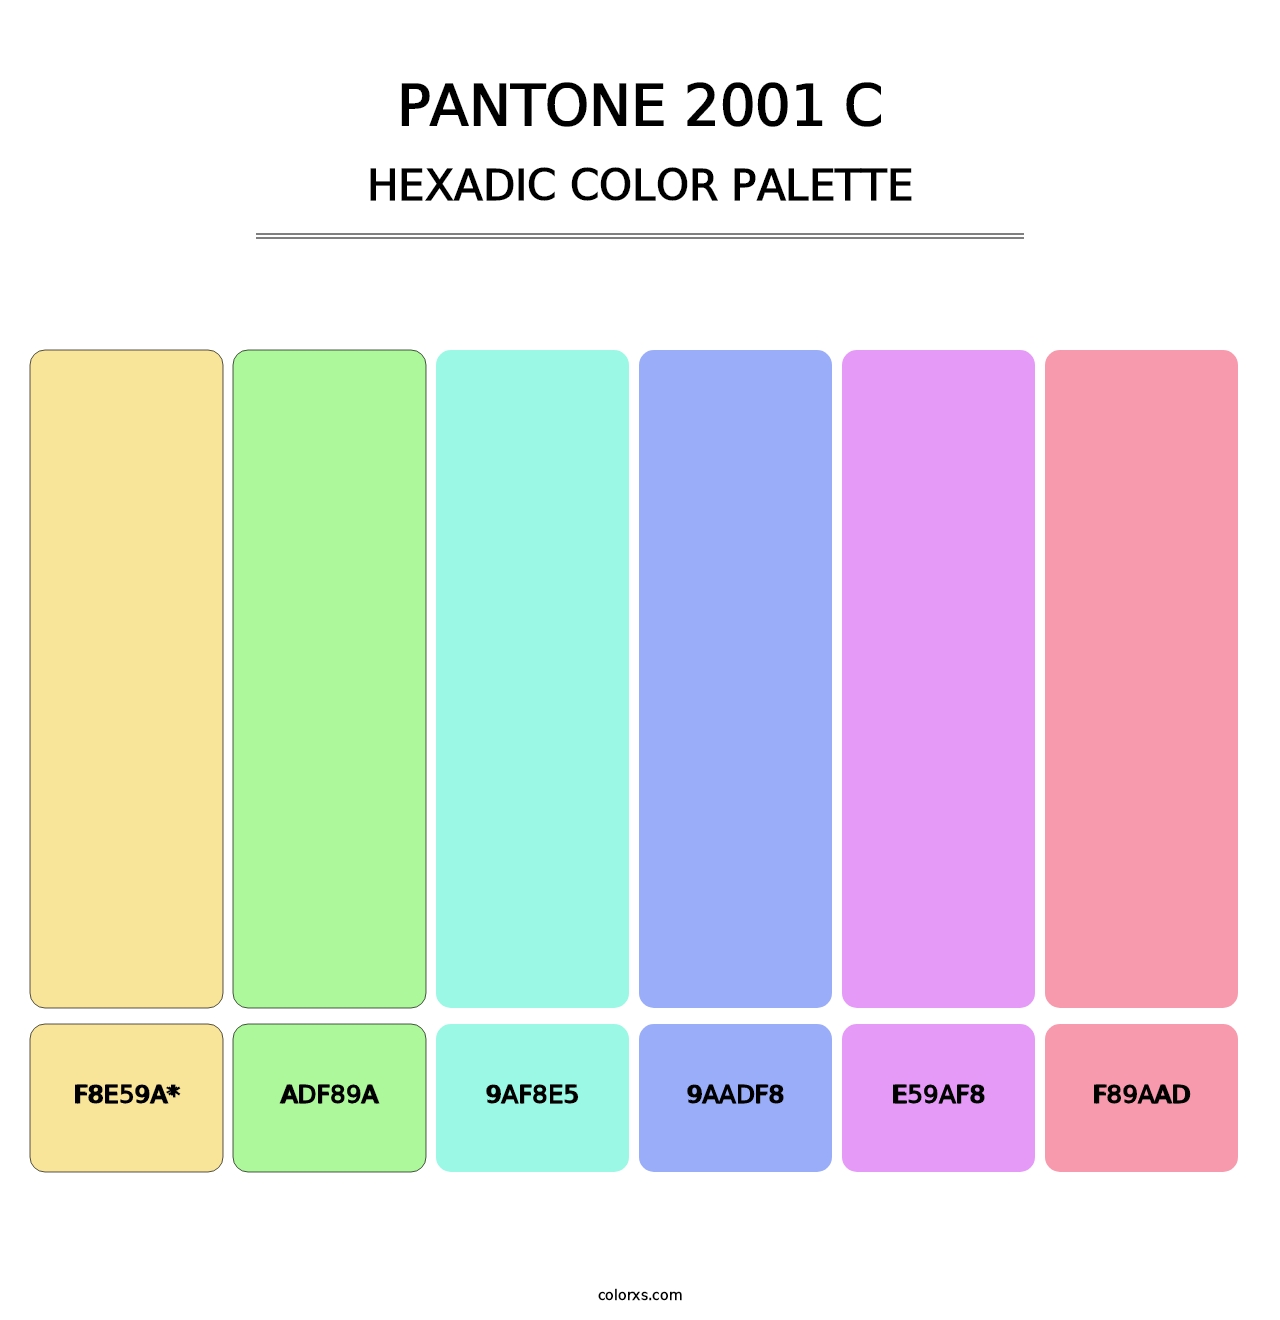 PANTONE 2001 C - Hexadic Color Palette